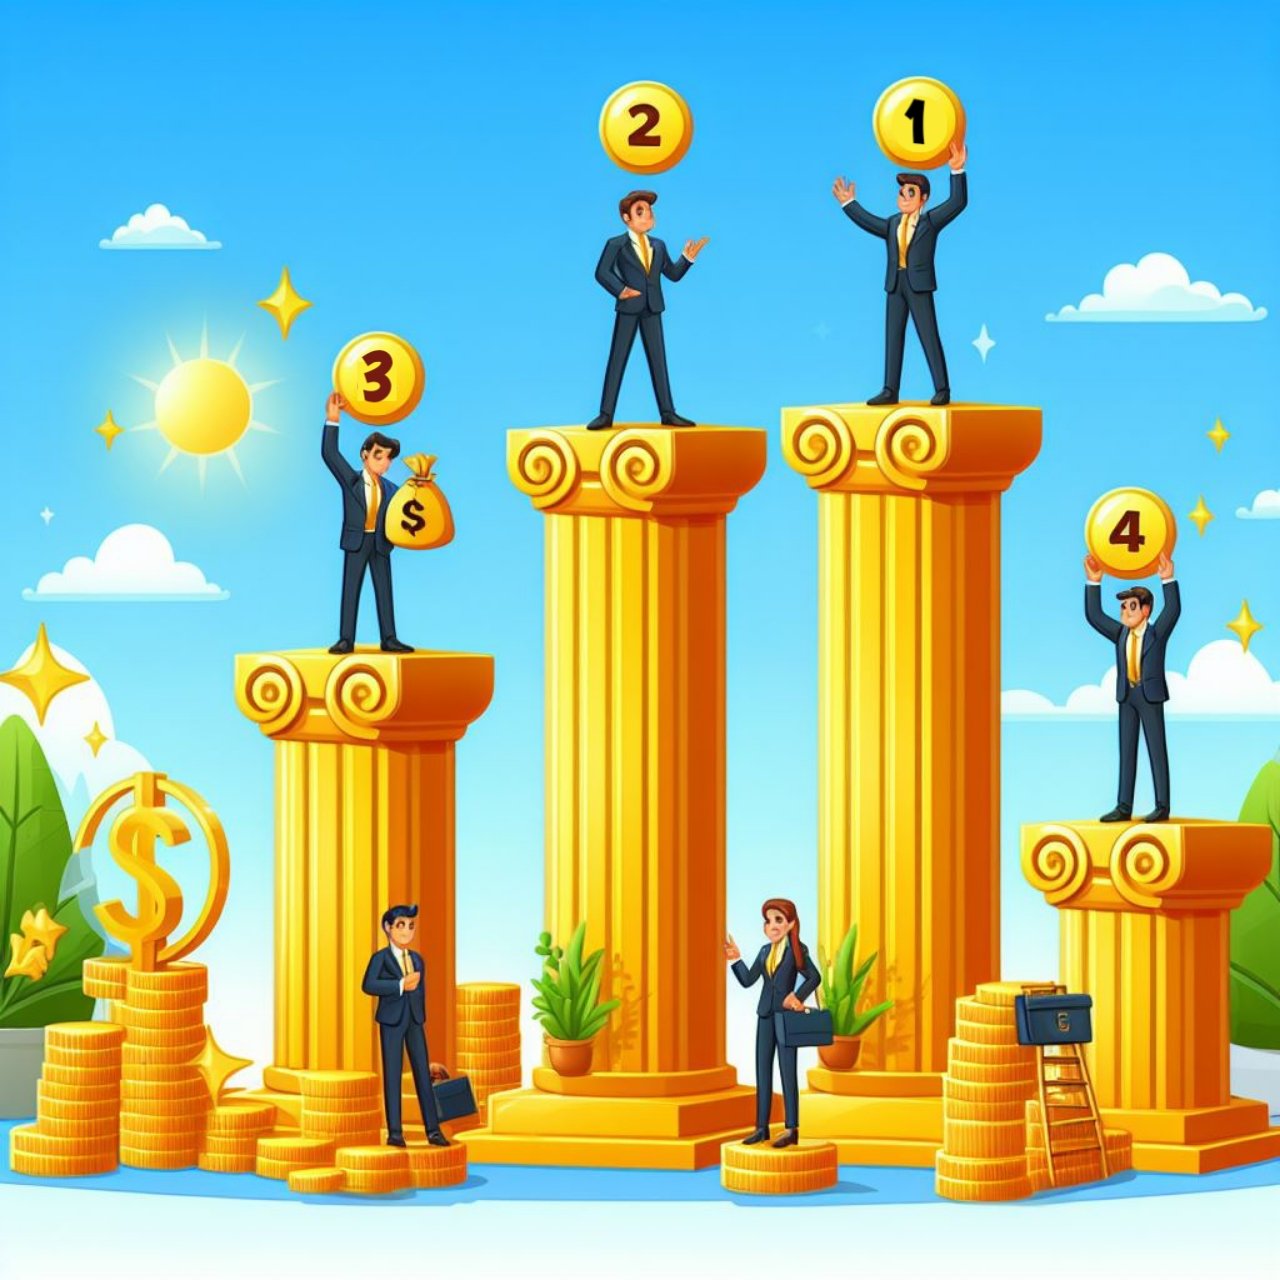 4 golden pillars of goal setting in cartoon